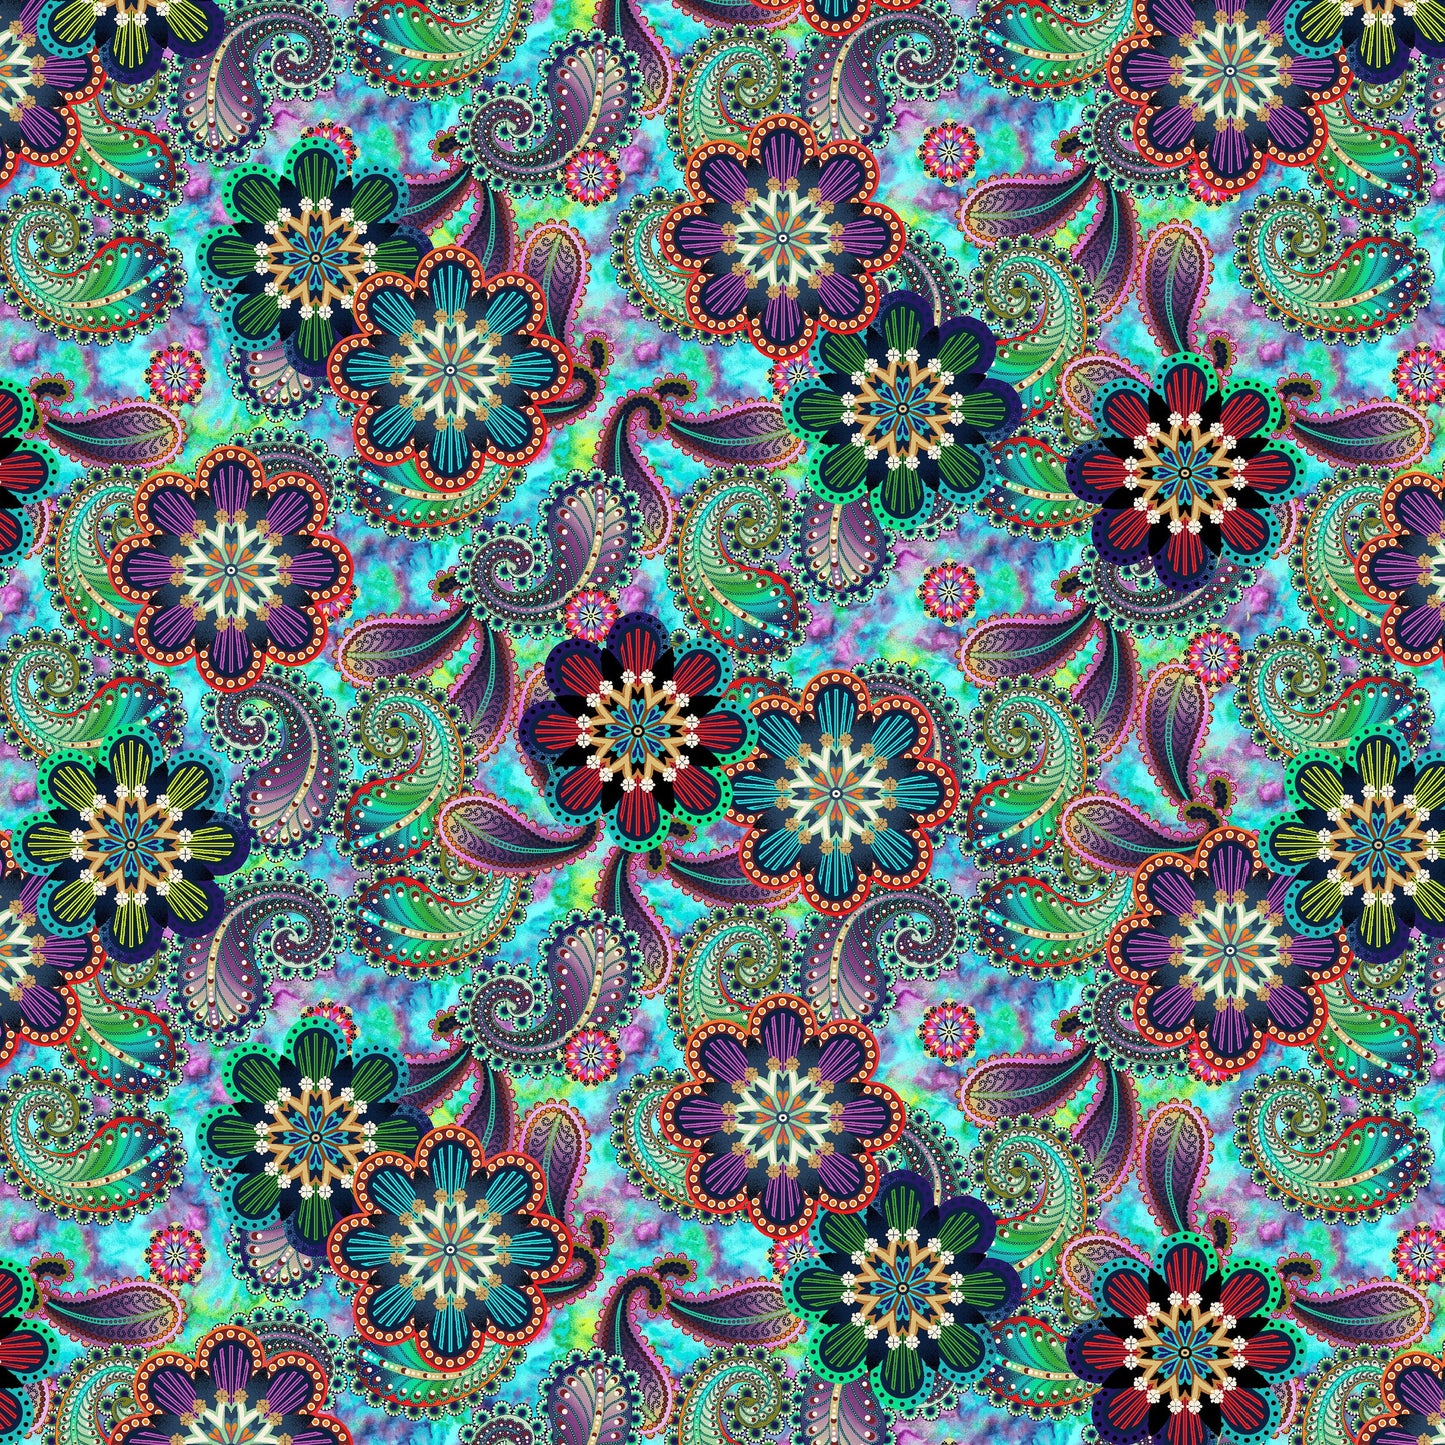 Blooming Paisleys by Art Loft Large Medallion Allover Indigo 5599-77 Digitally Printed Cotton Woven Fabric